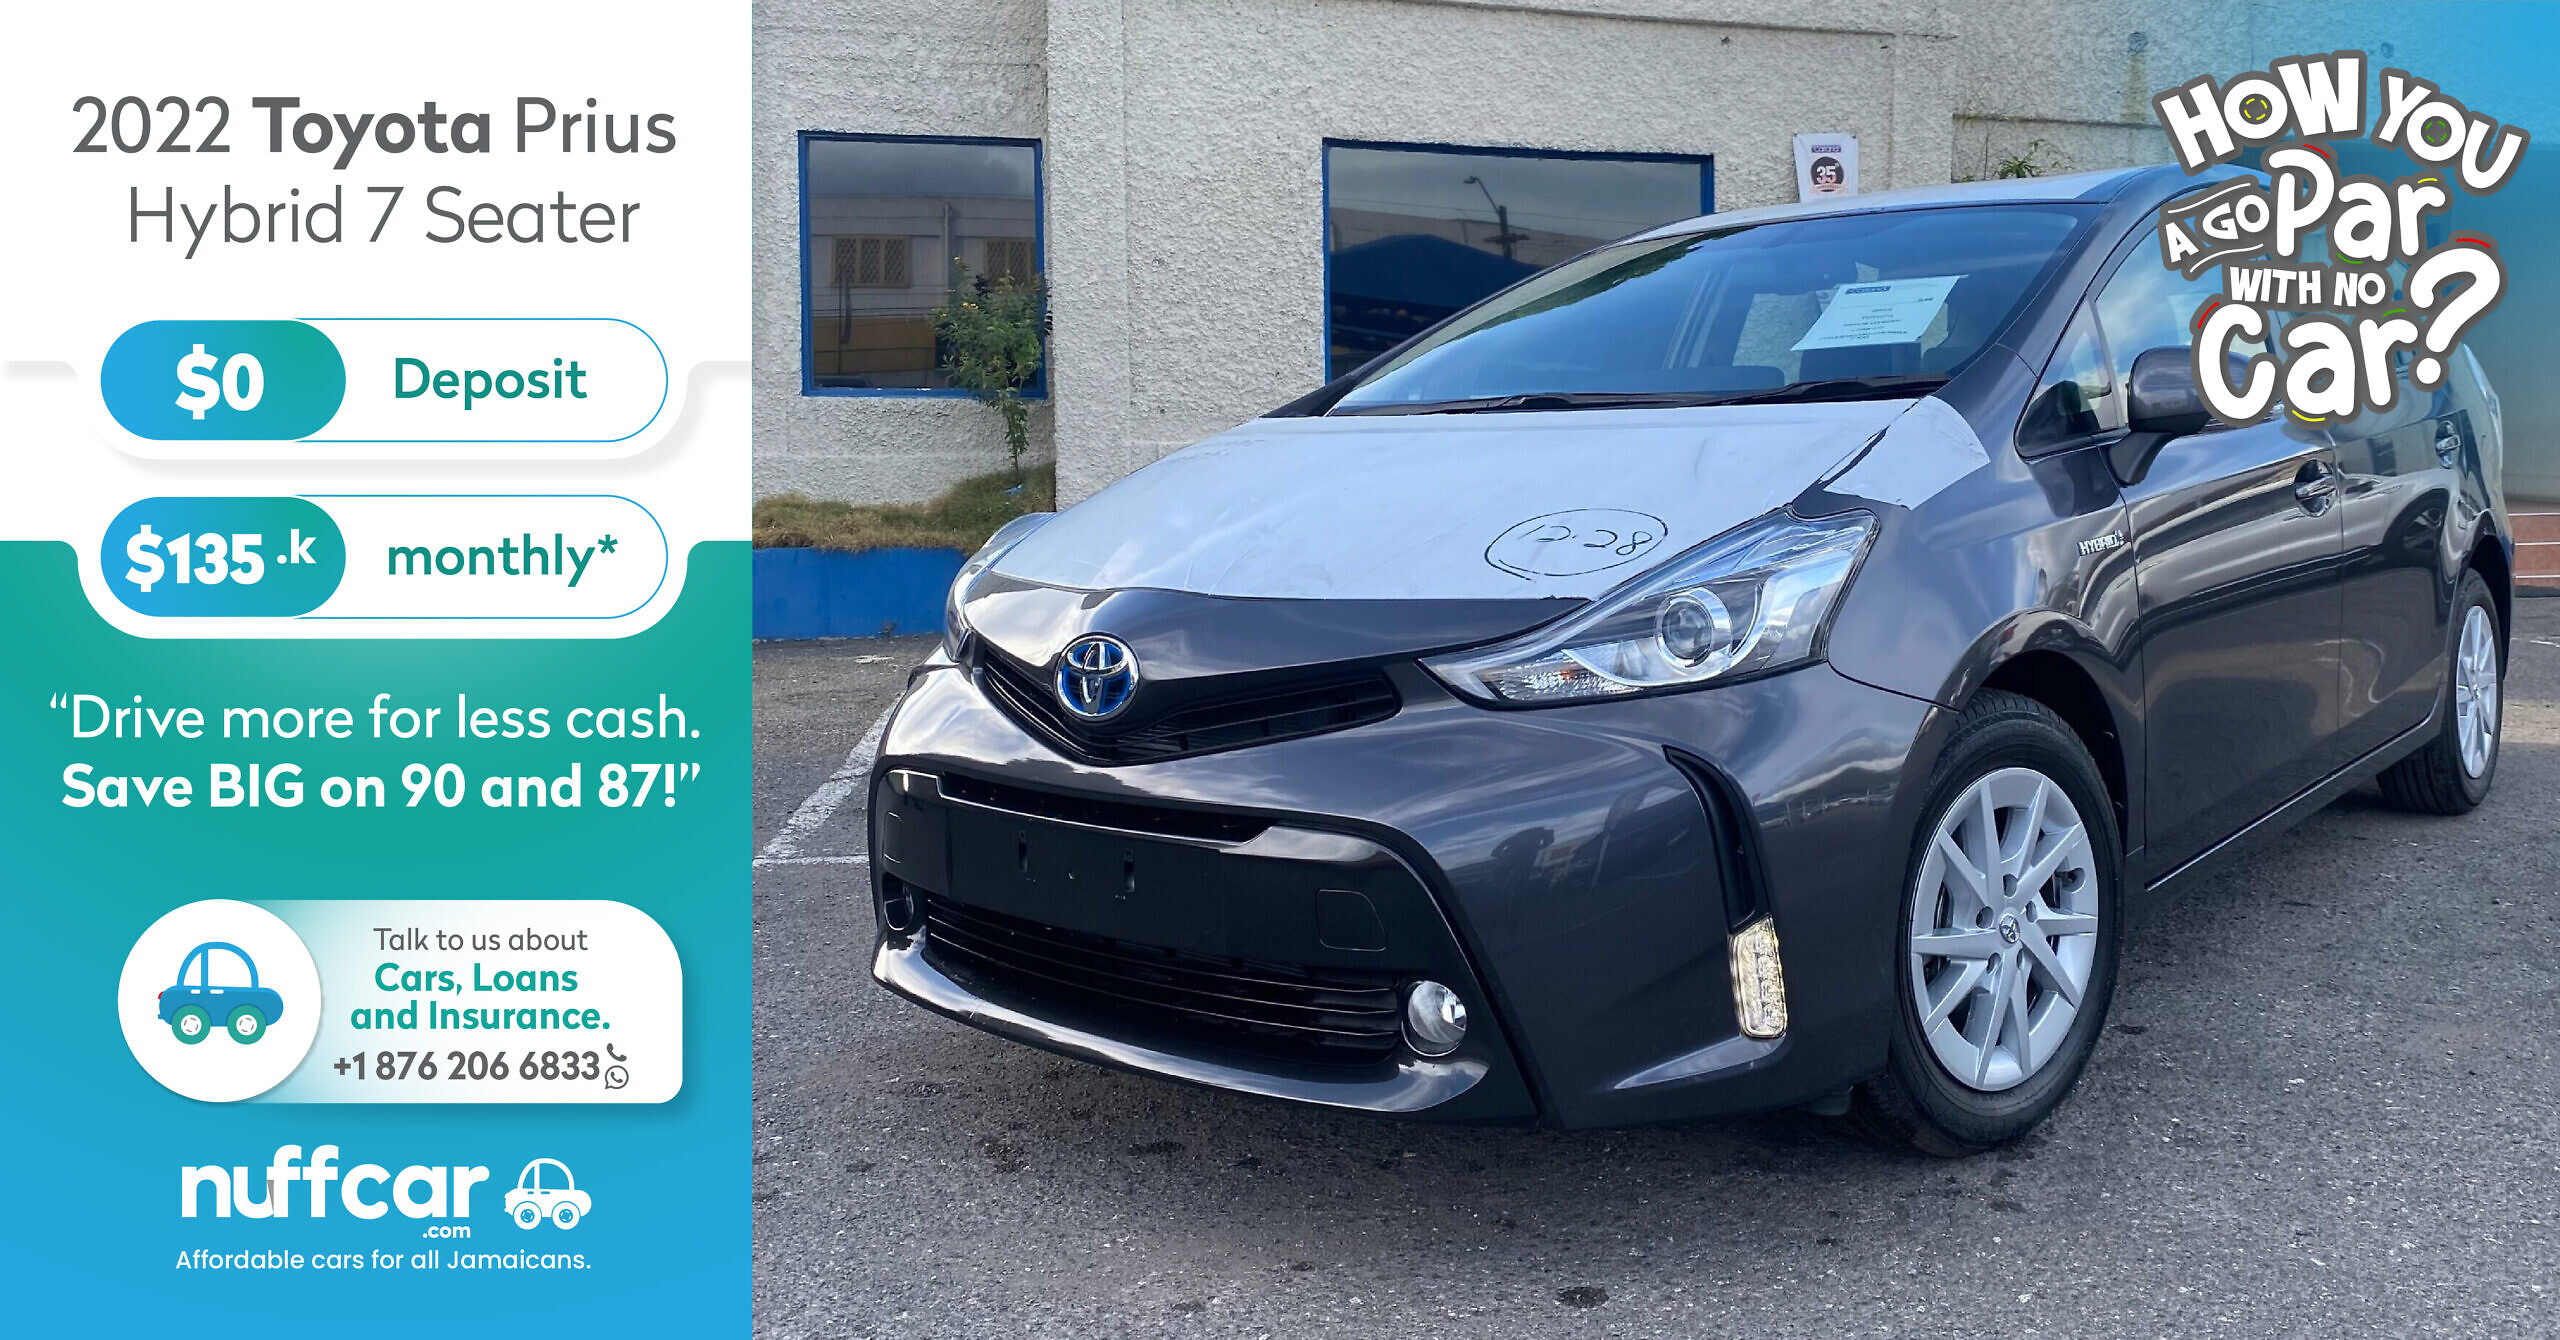 2022 Toyota Prius Hybrid 7 Seater – Get a Fast n Easy No Deposit Loan